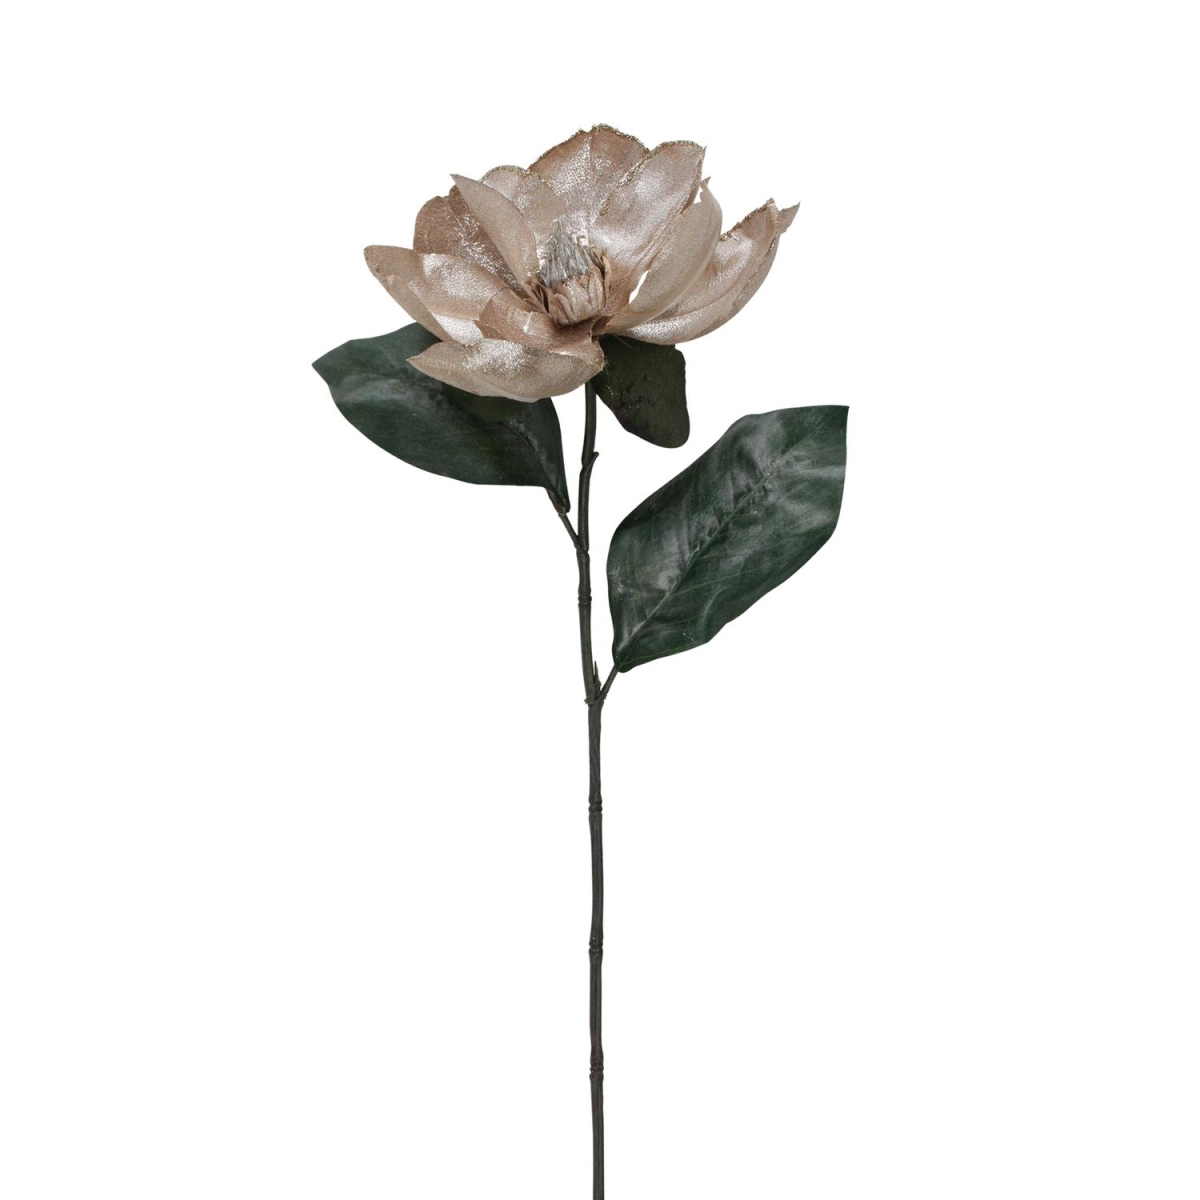 32625547 20 In. Artificial Metallic Rose Decorative Magnolia Stem, Gold